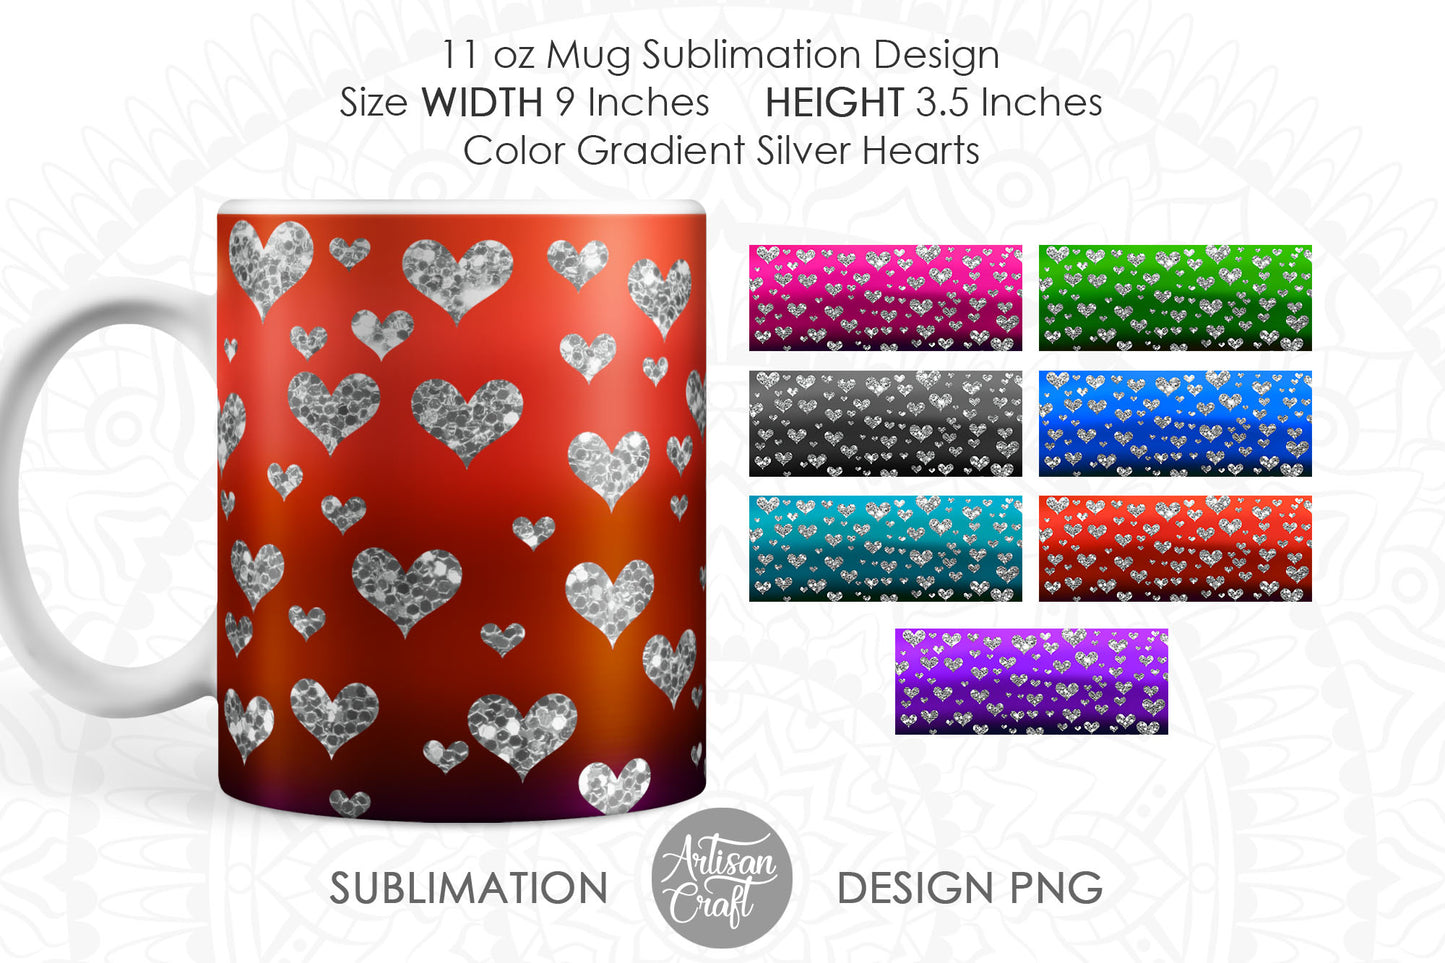 Mug sublimation, color gradient silver glitter heart